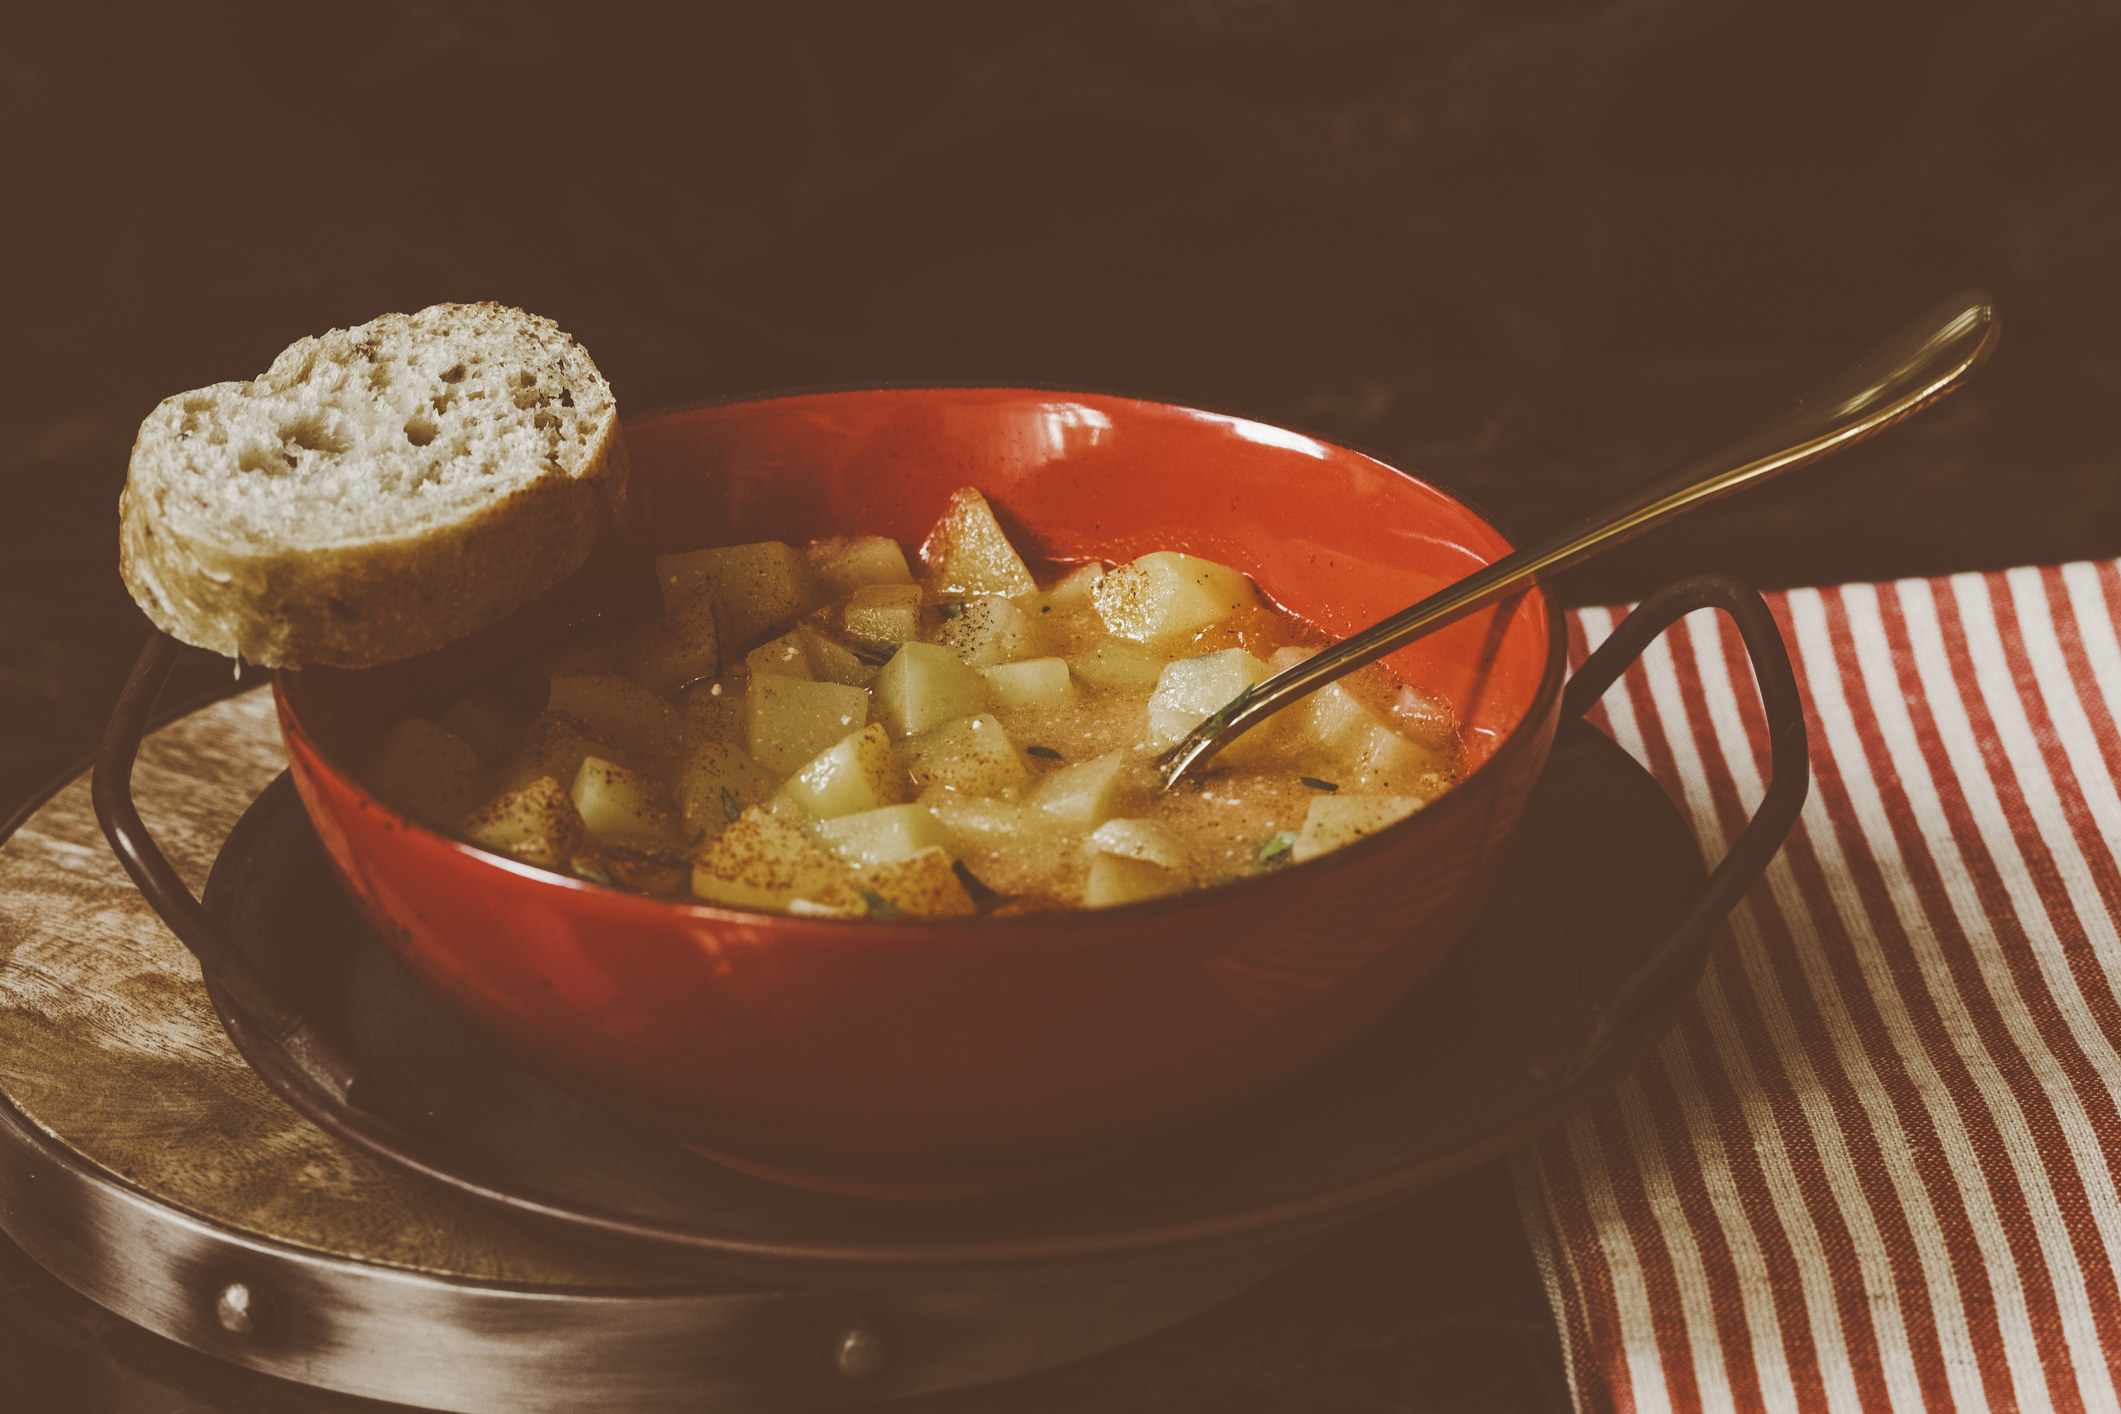 A bowl of potato soup with bread.